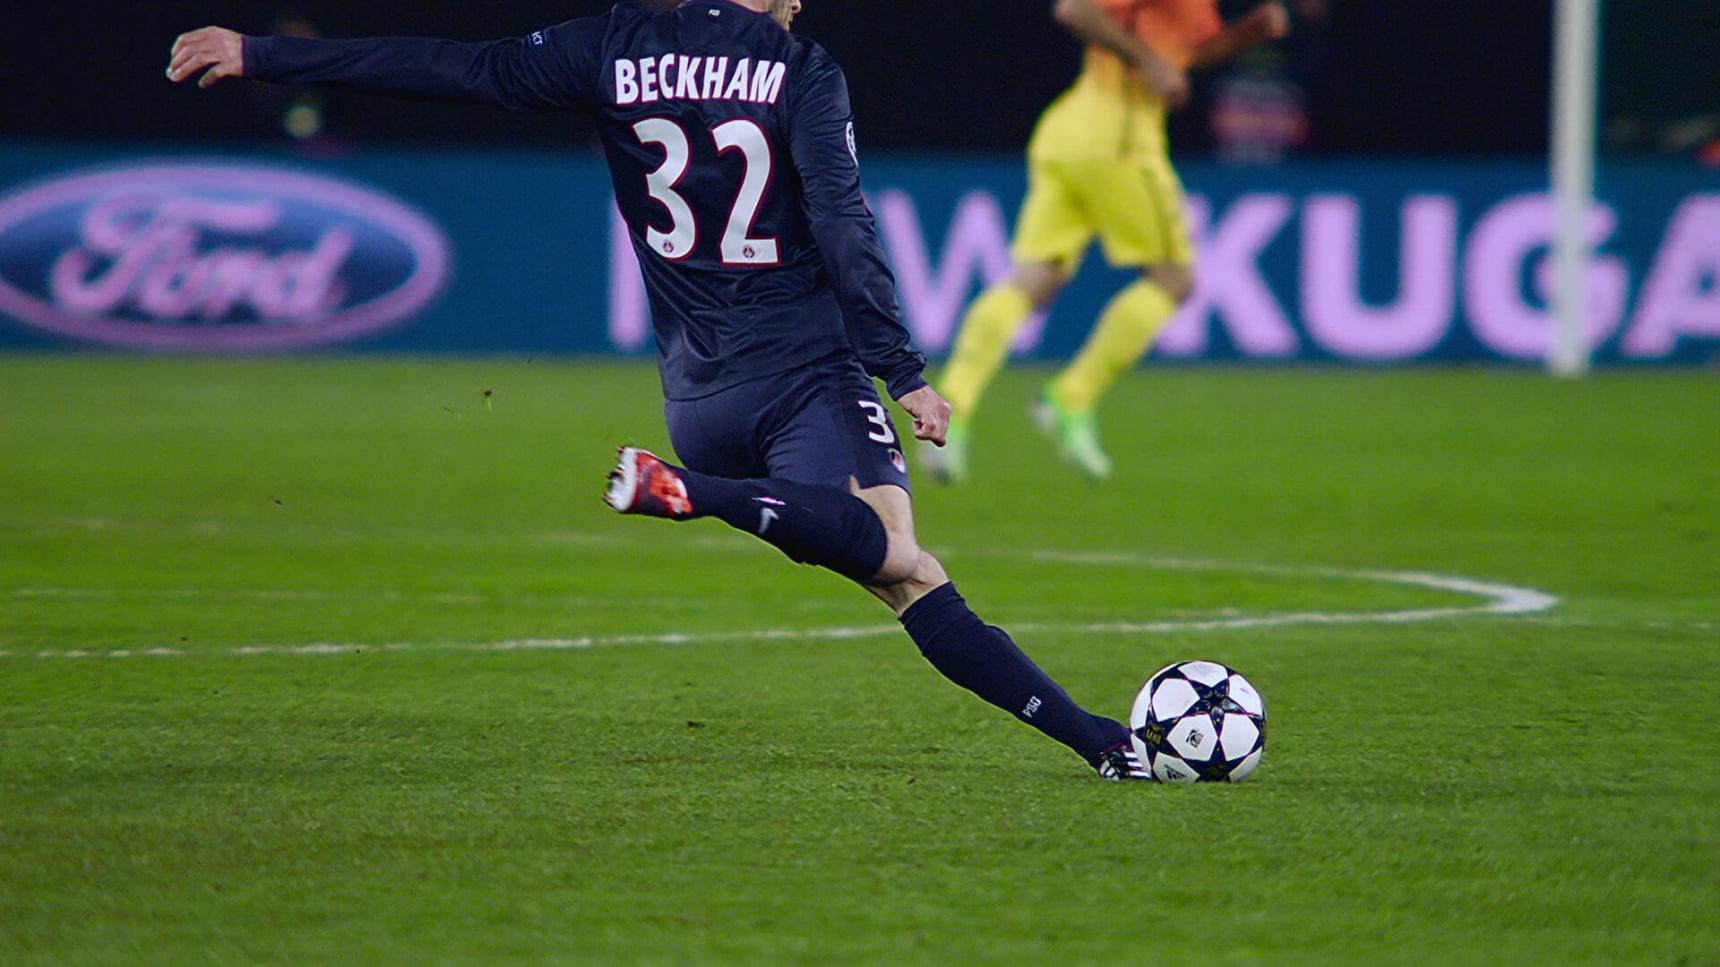 Fondo de pantalla de Beckham online